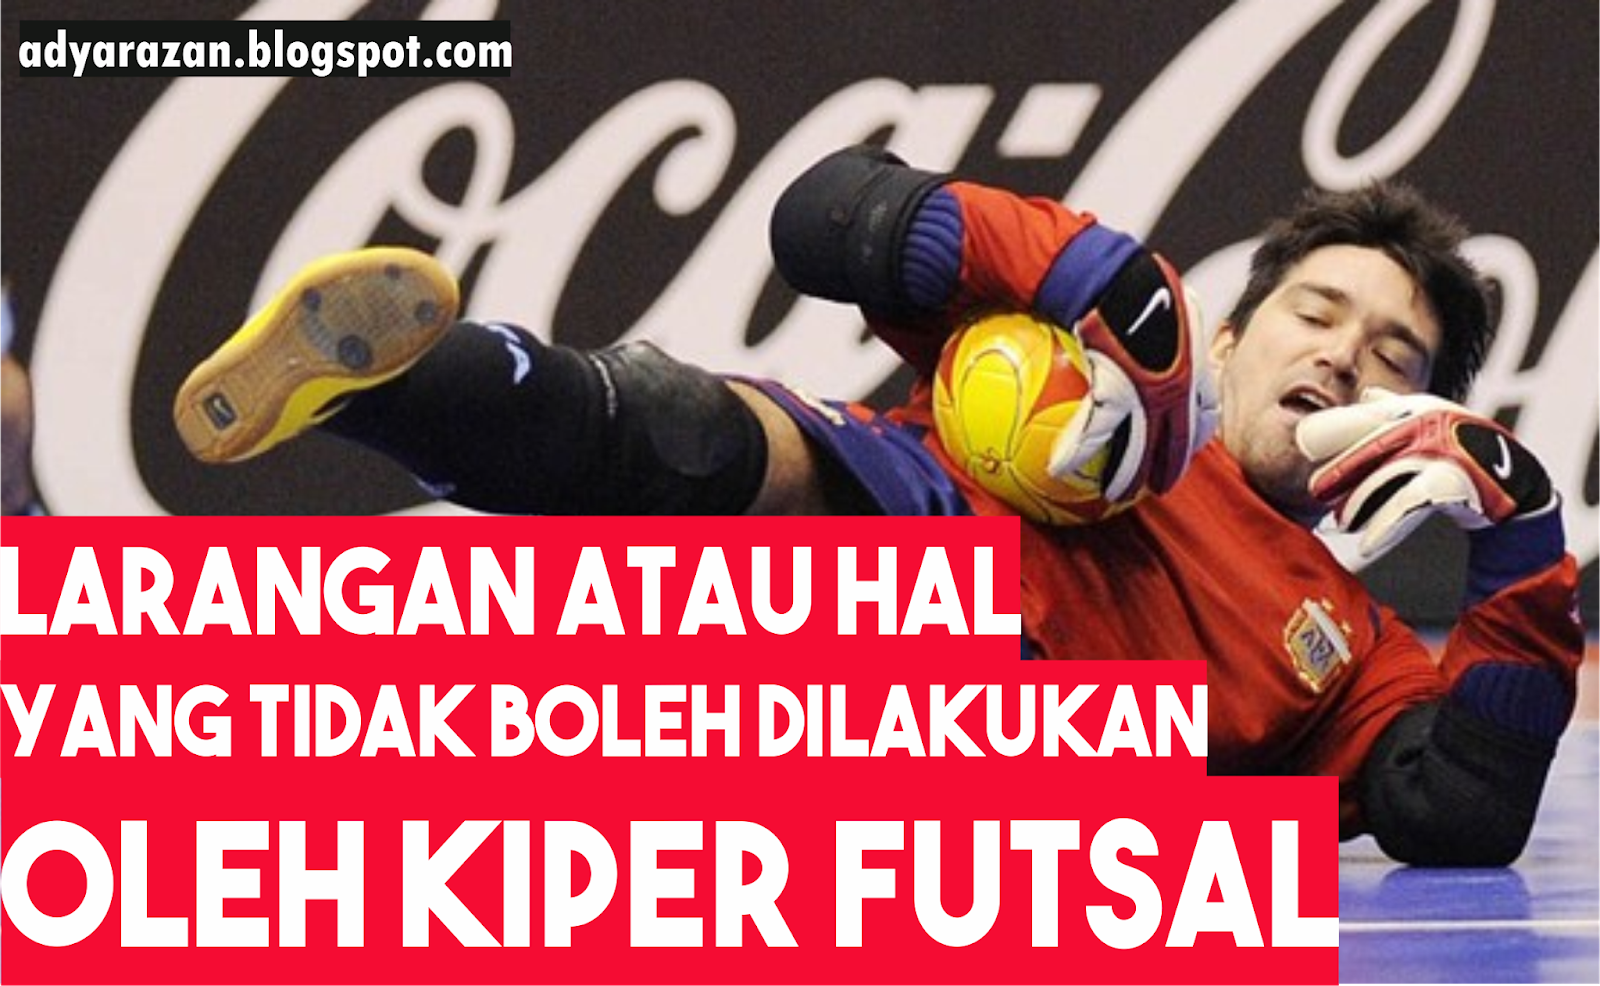 20 Inspirasi Kata Kata Motivasi Kiper Futsal Lucy Feng